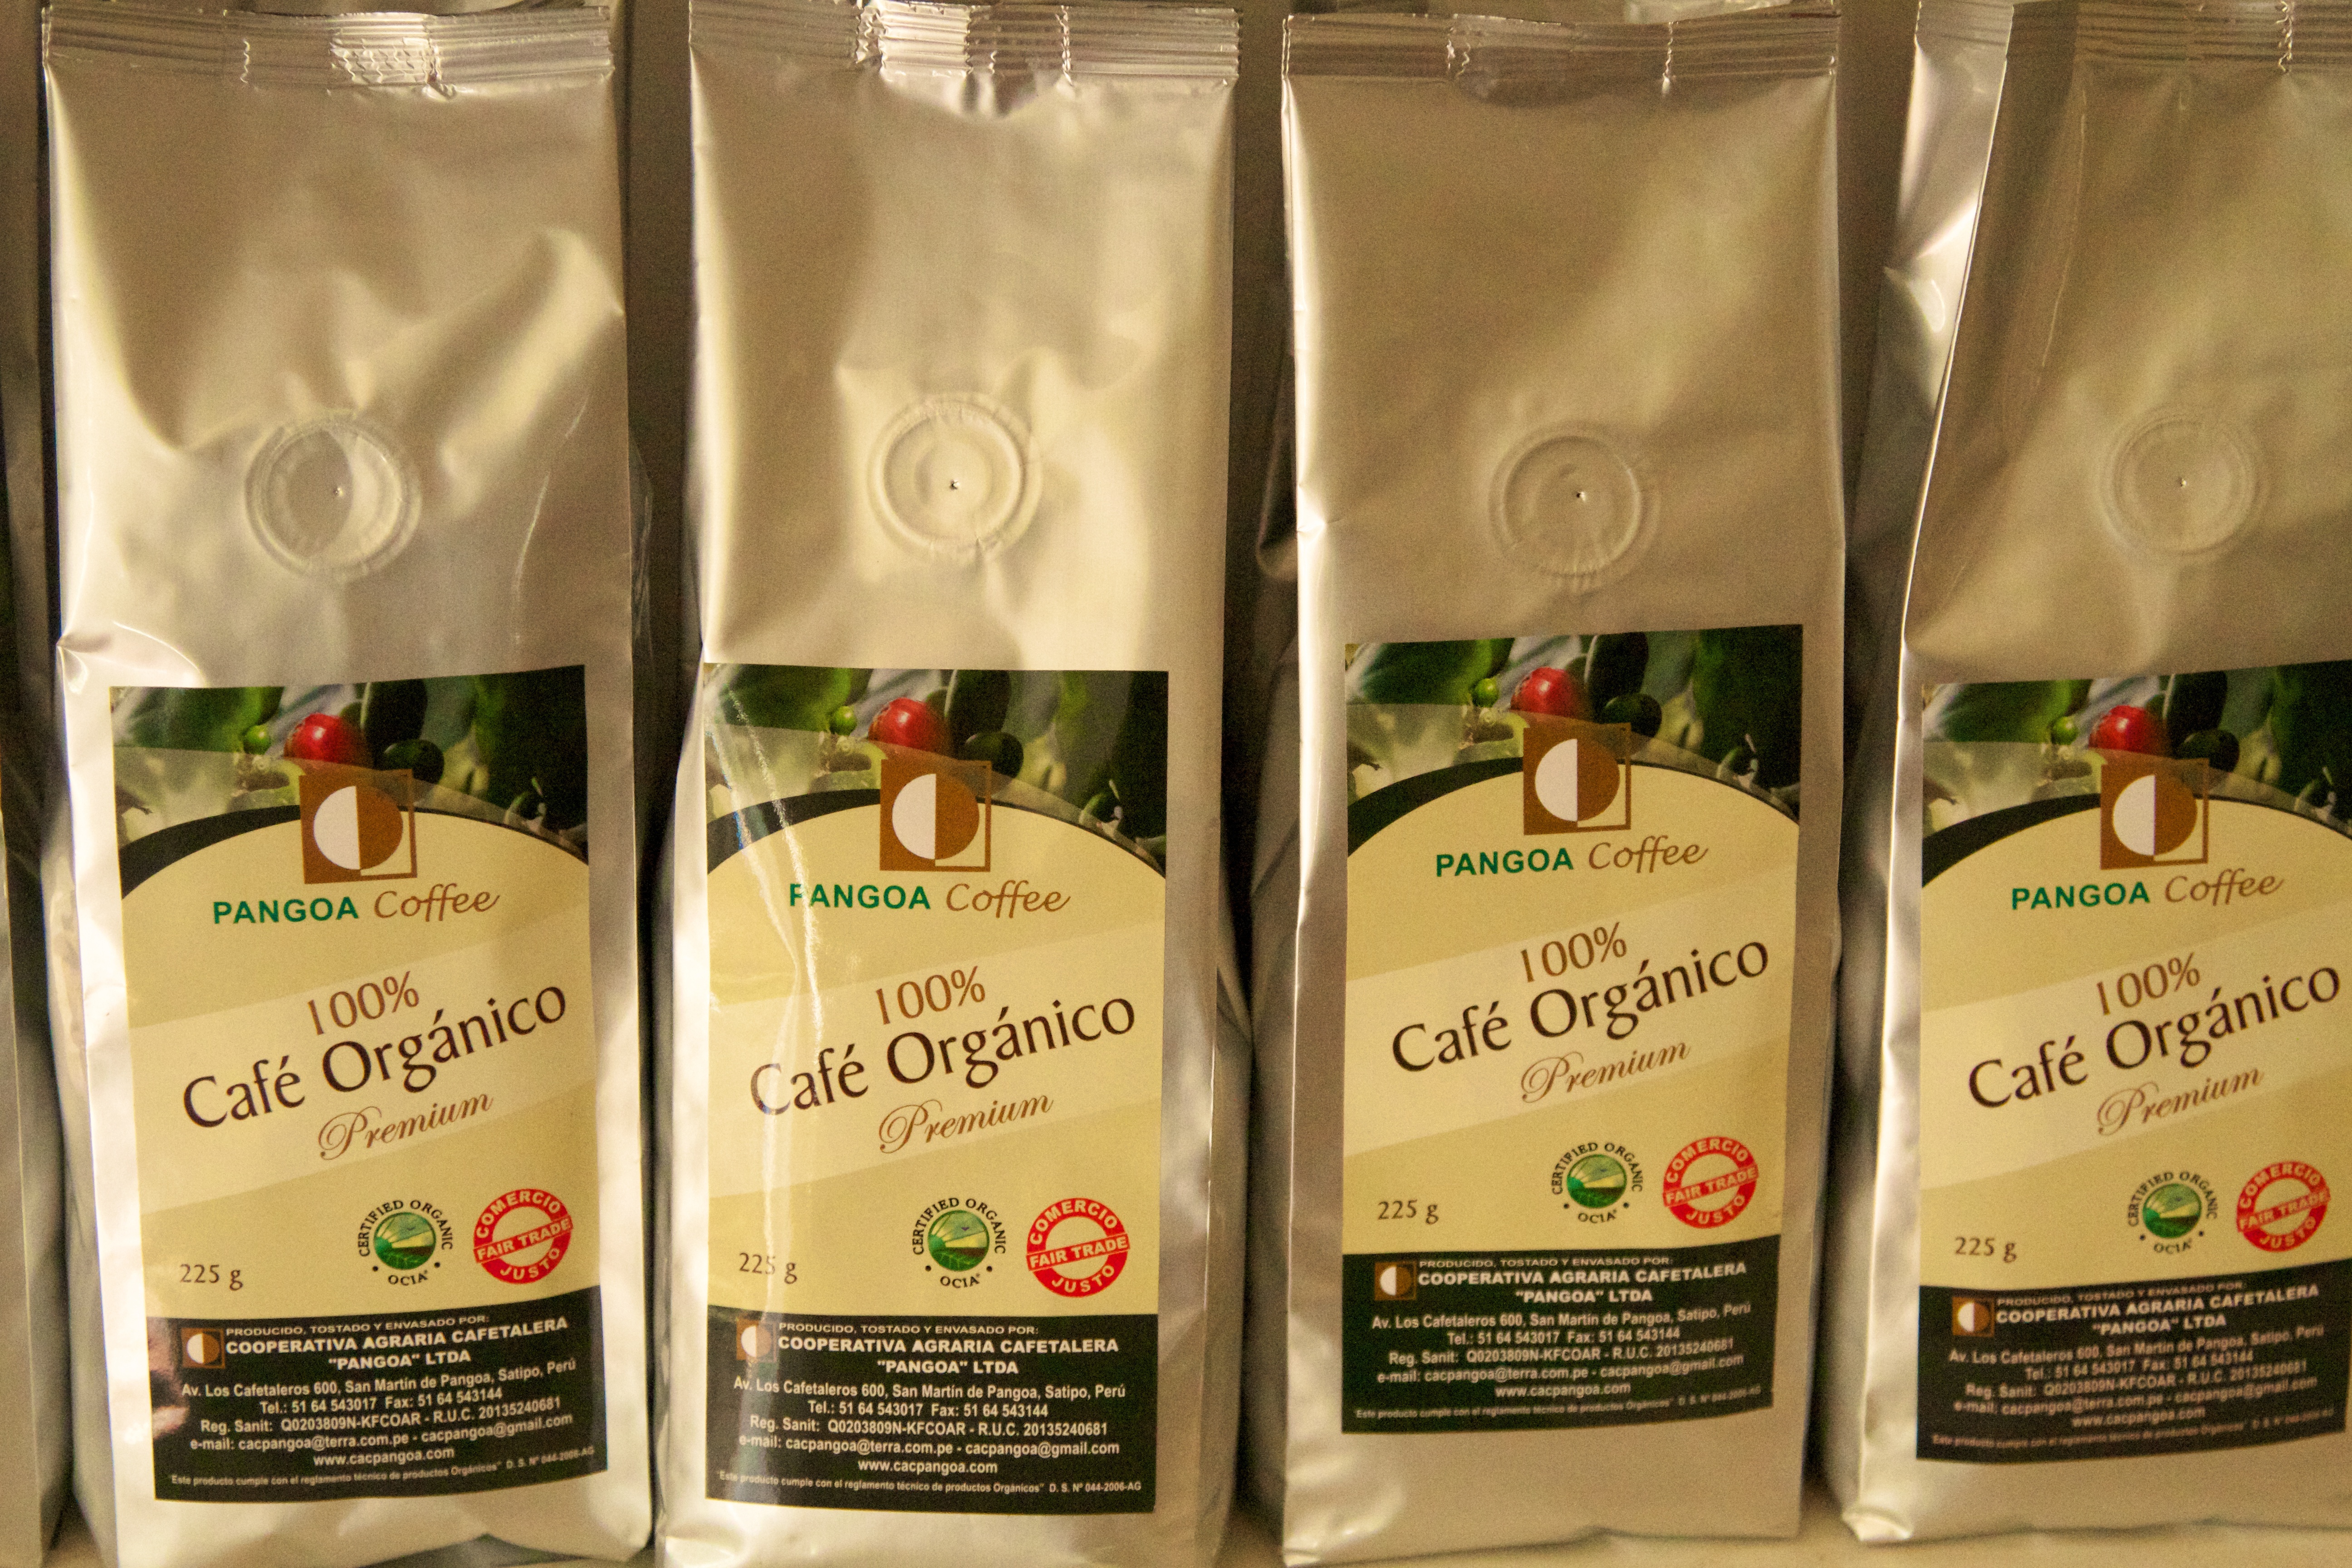 Pangoa's certified organic coffee